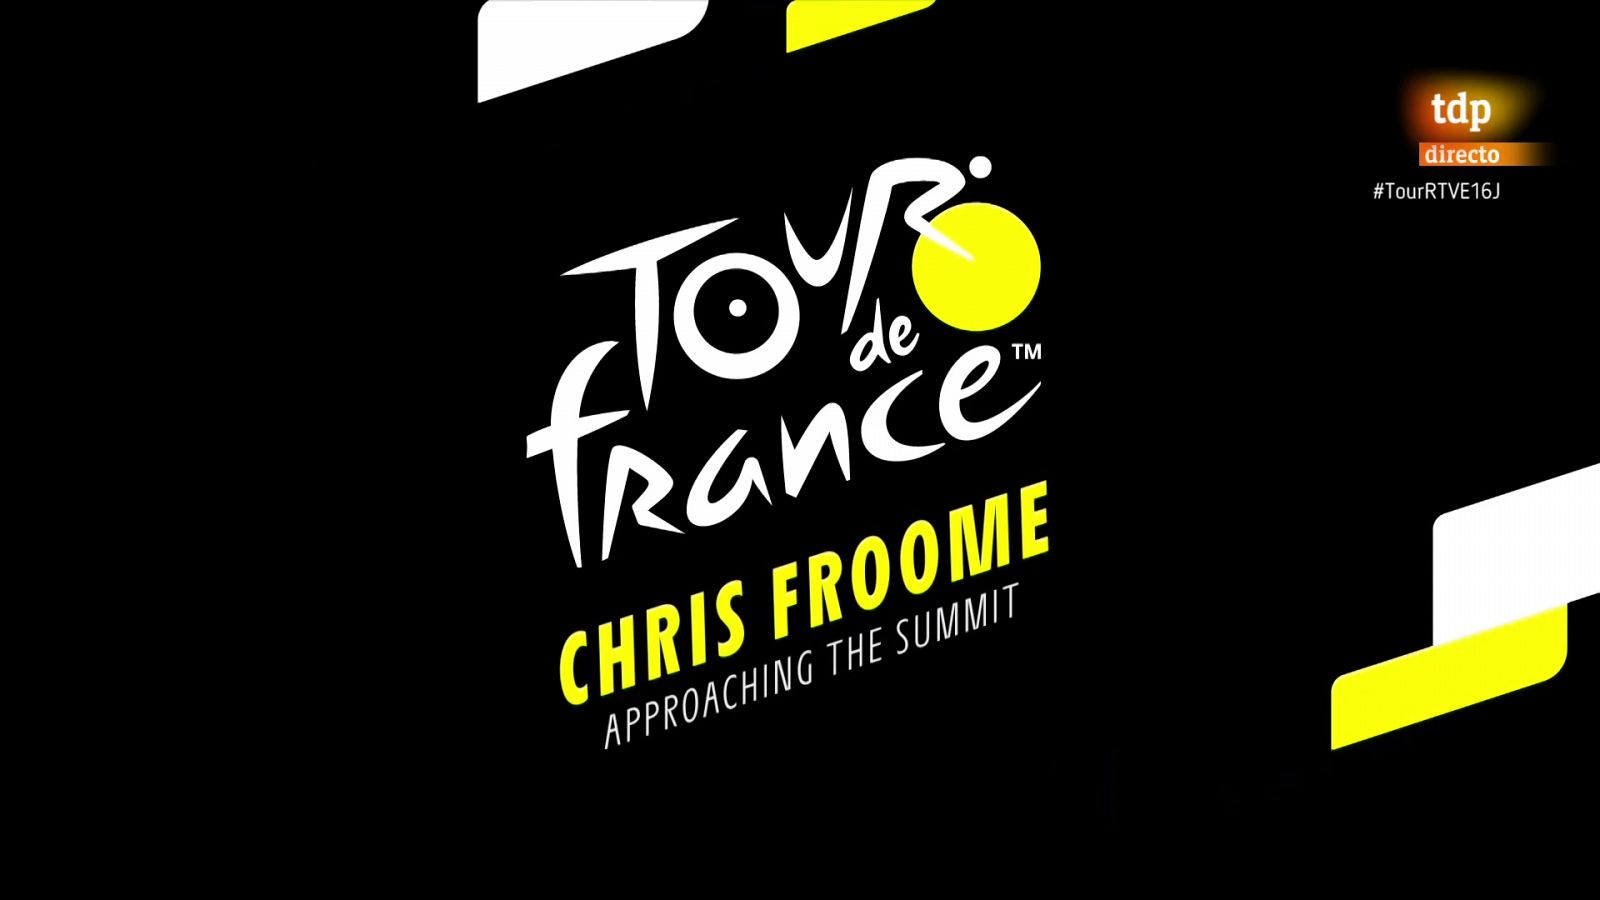 Chris Froome: "Me encanta ponerme al límite" - RTVE.es